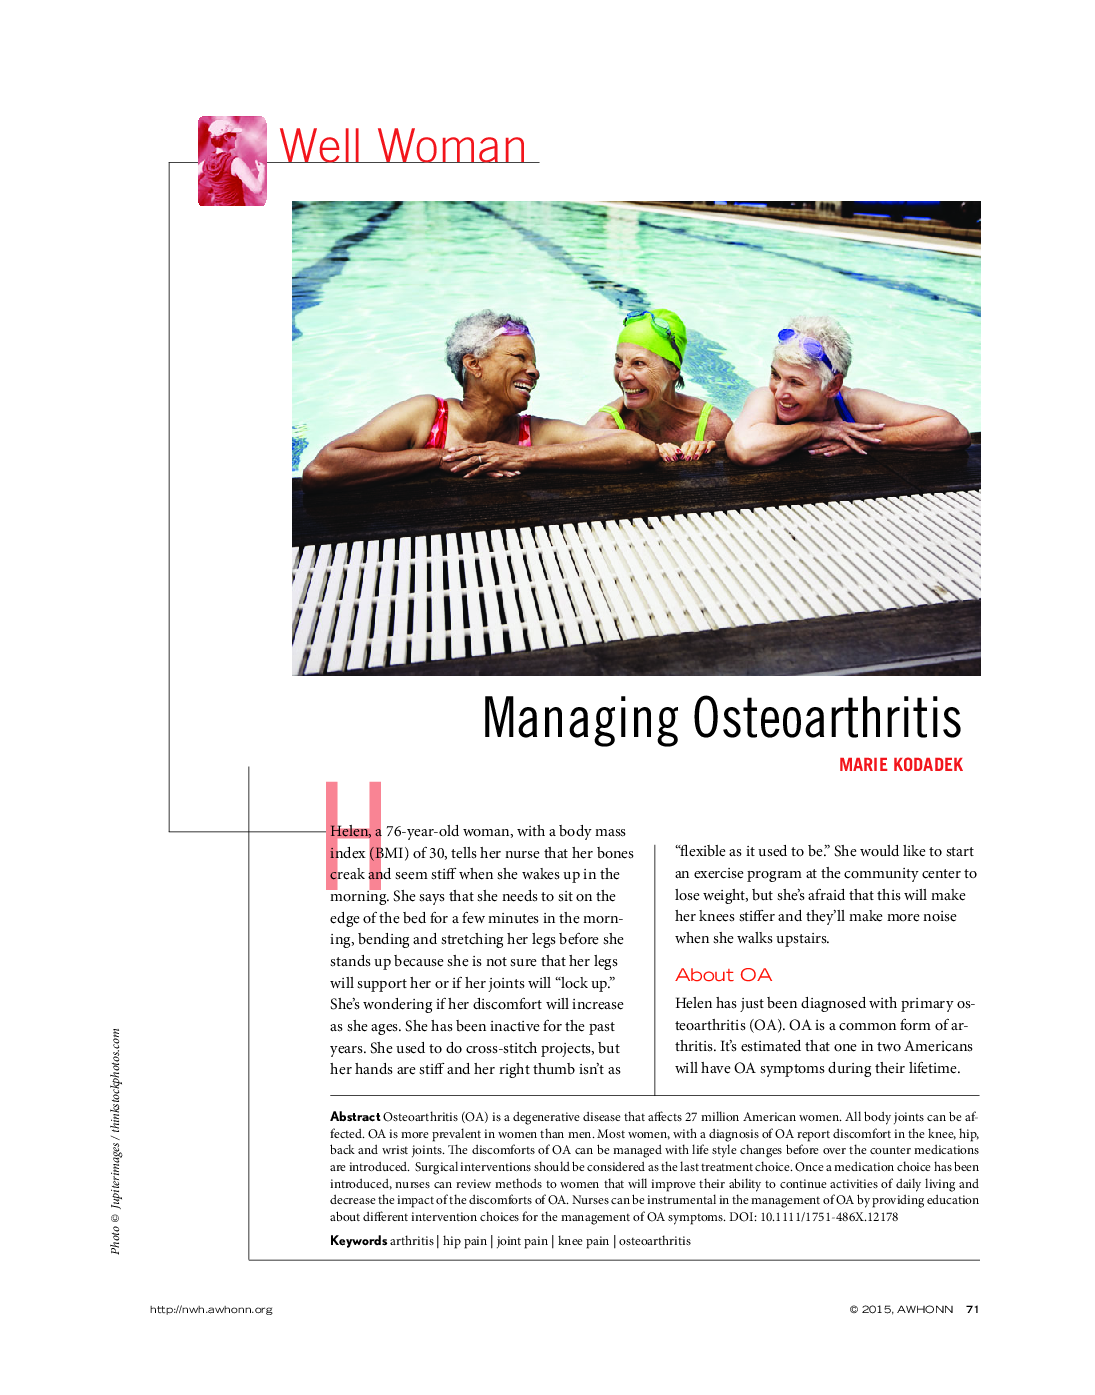 Managing Osteoarthritis